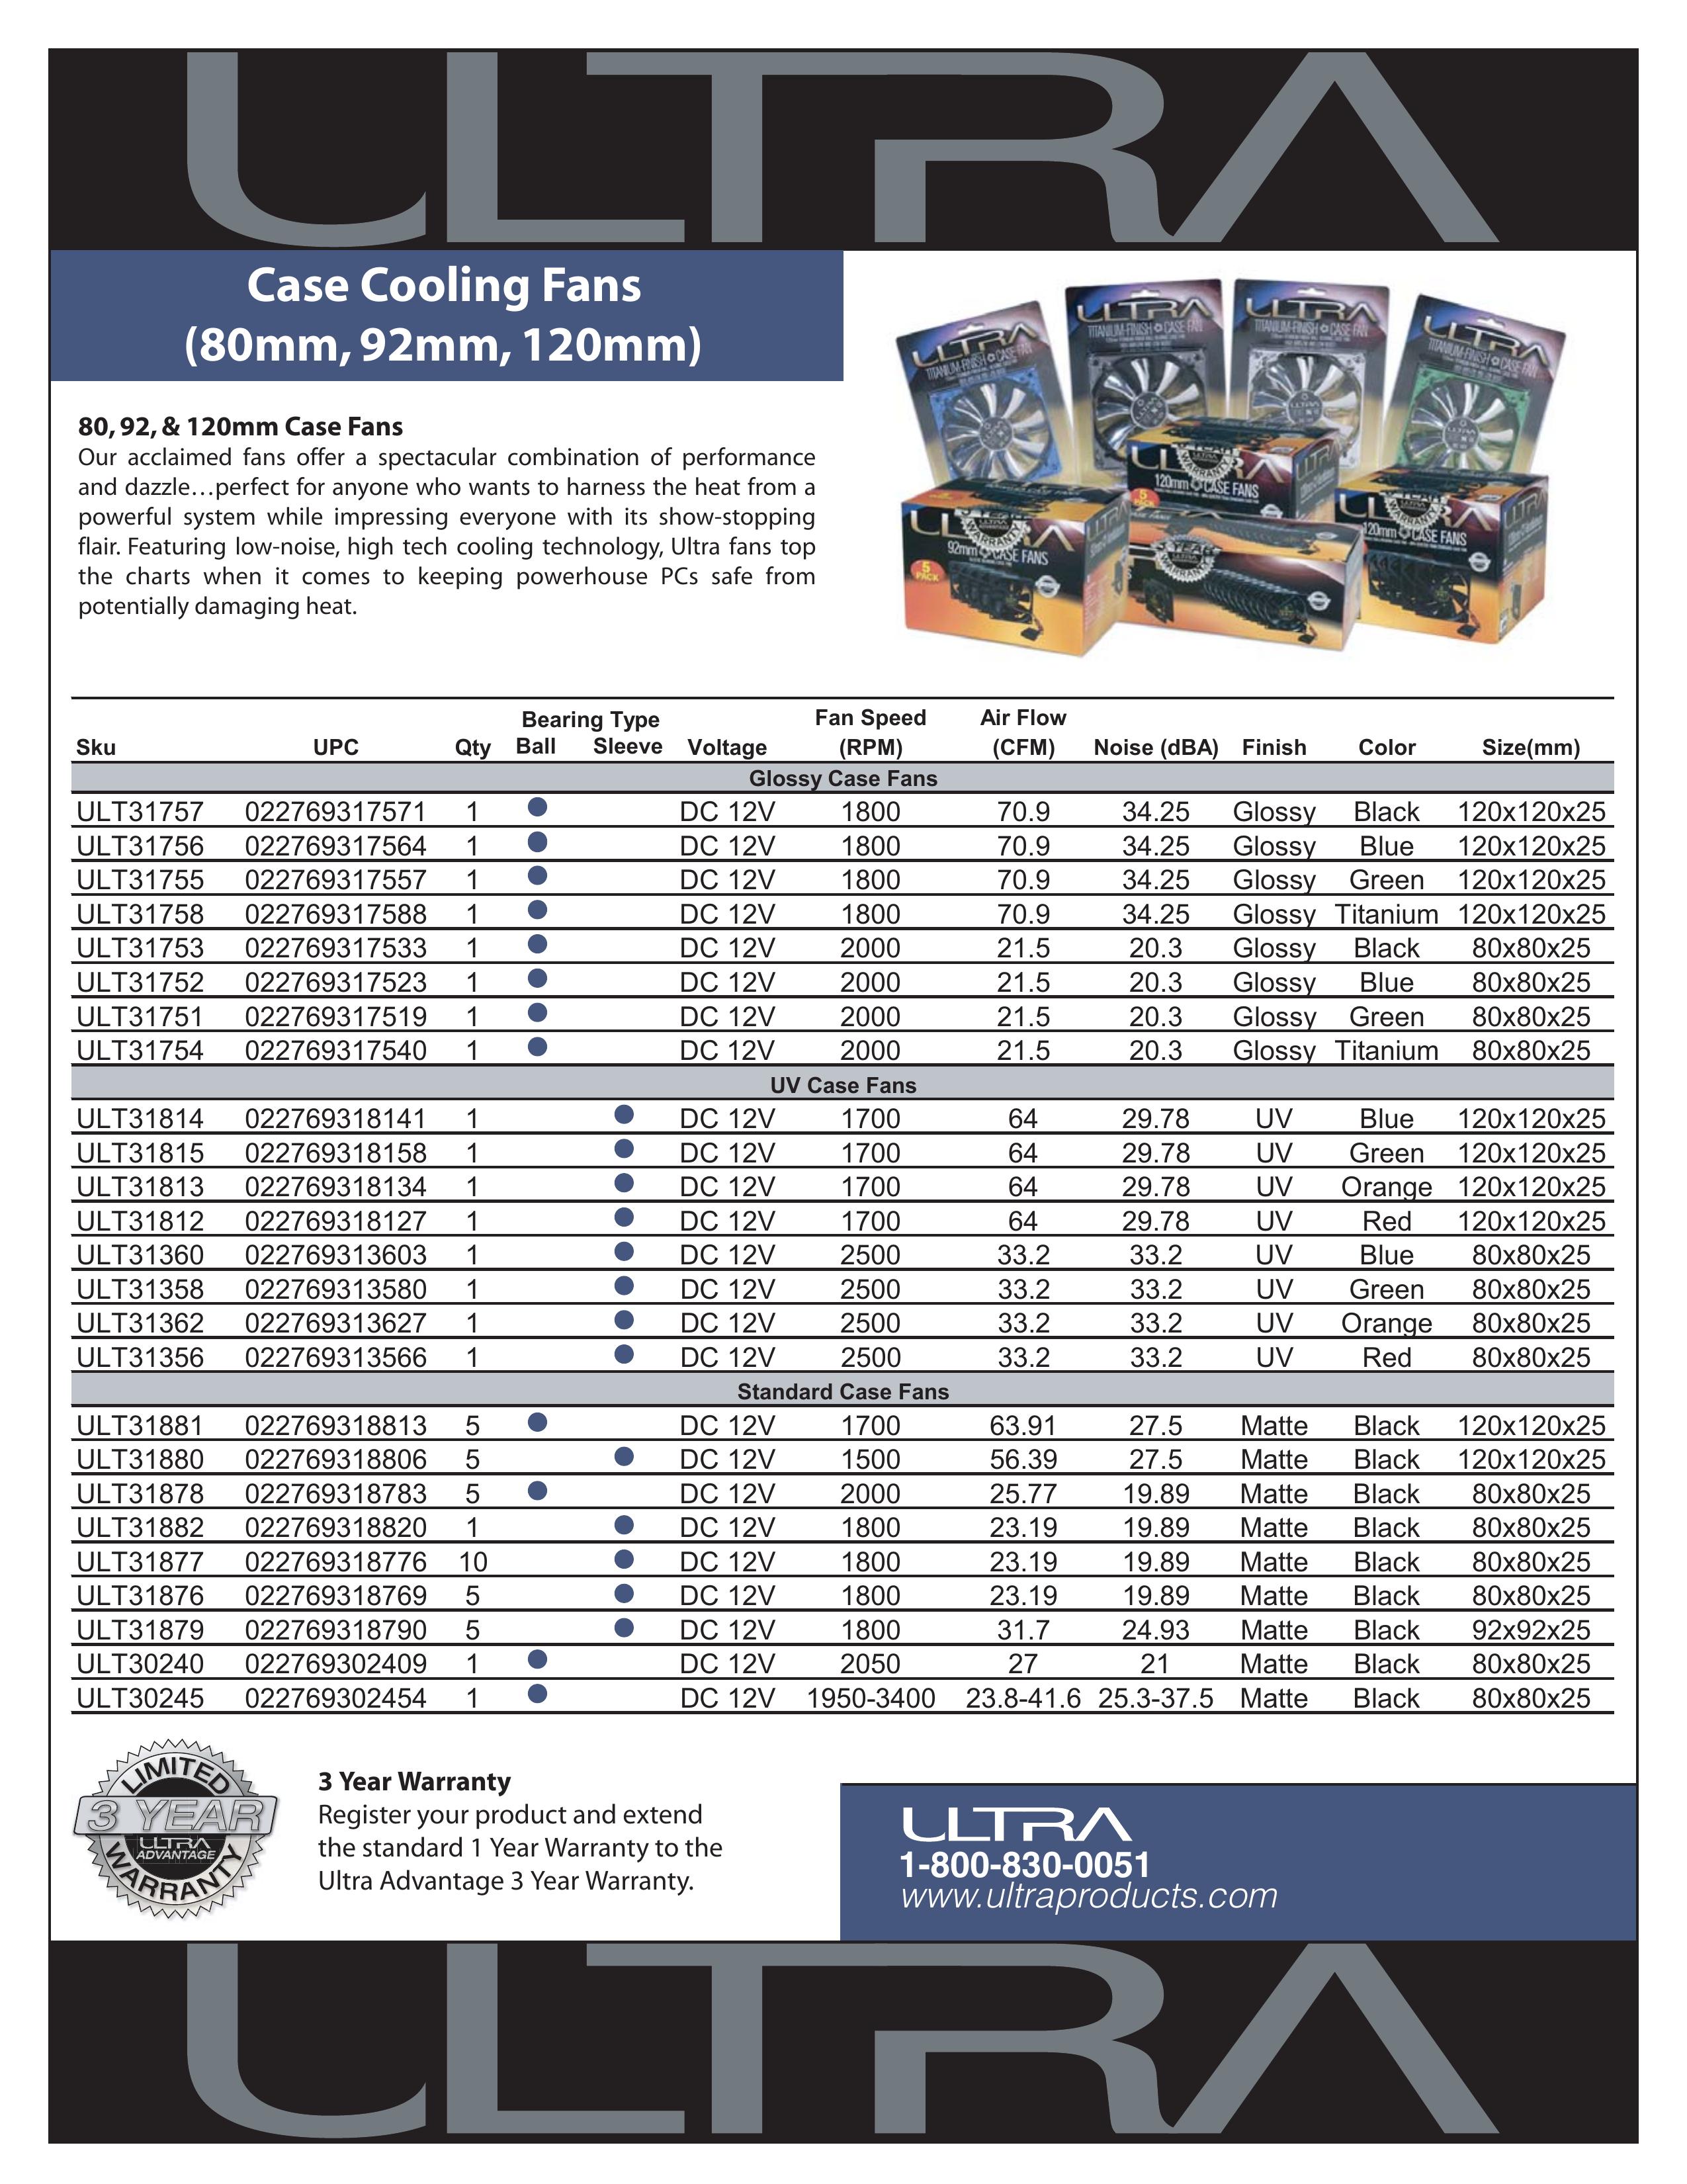 Ultra Products ULT31362 Ventilation Hood User Manual